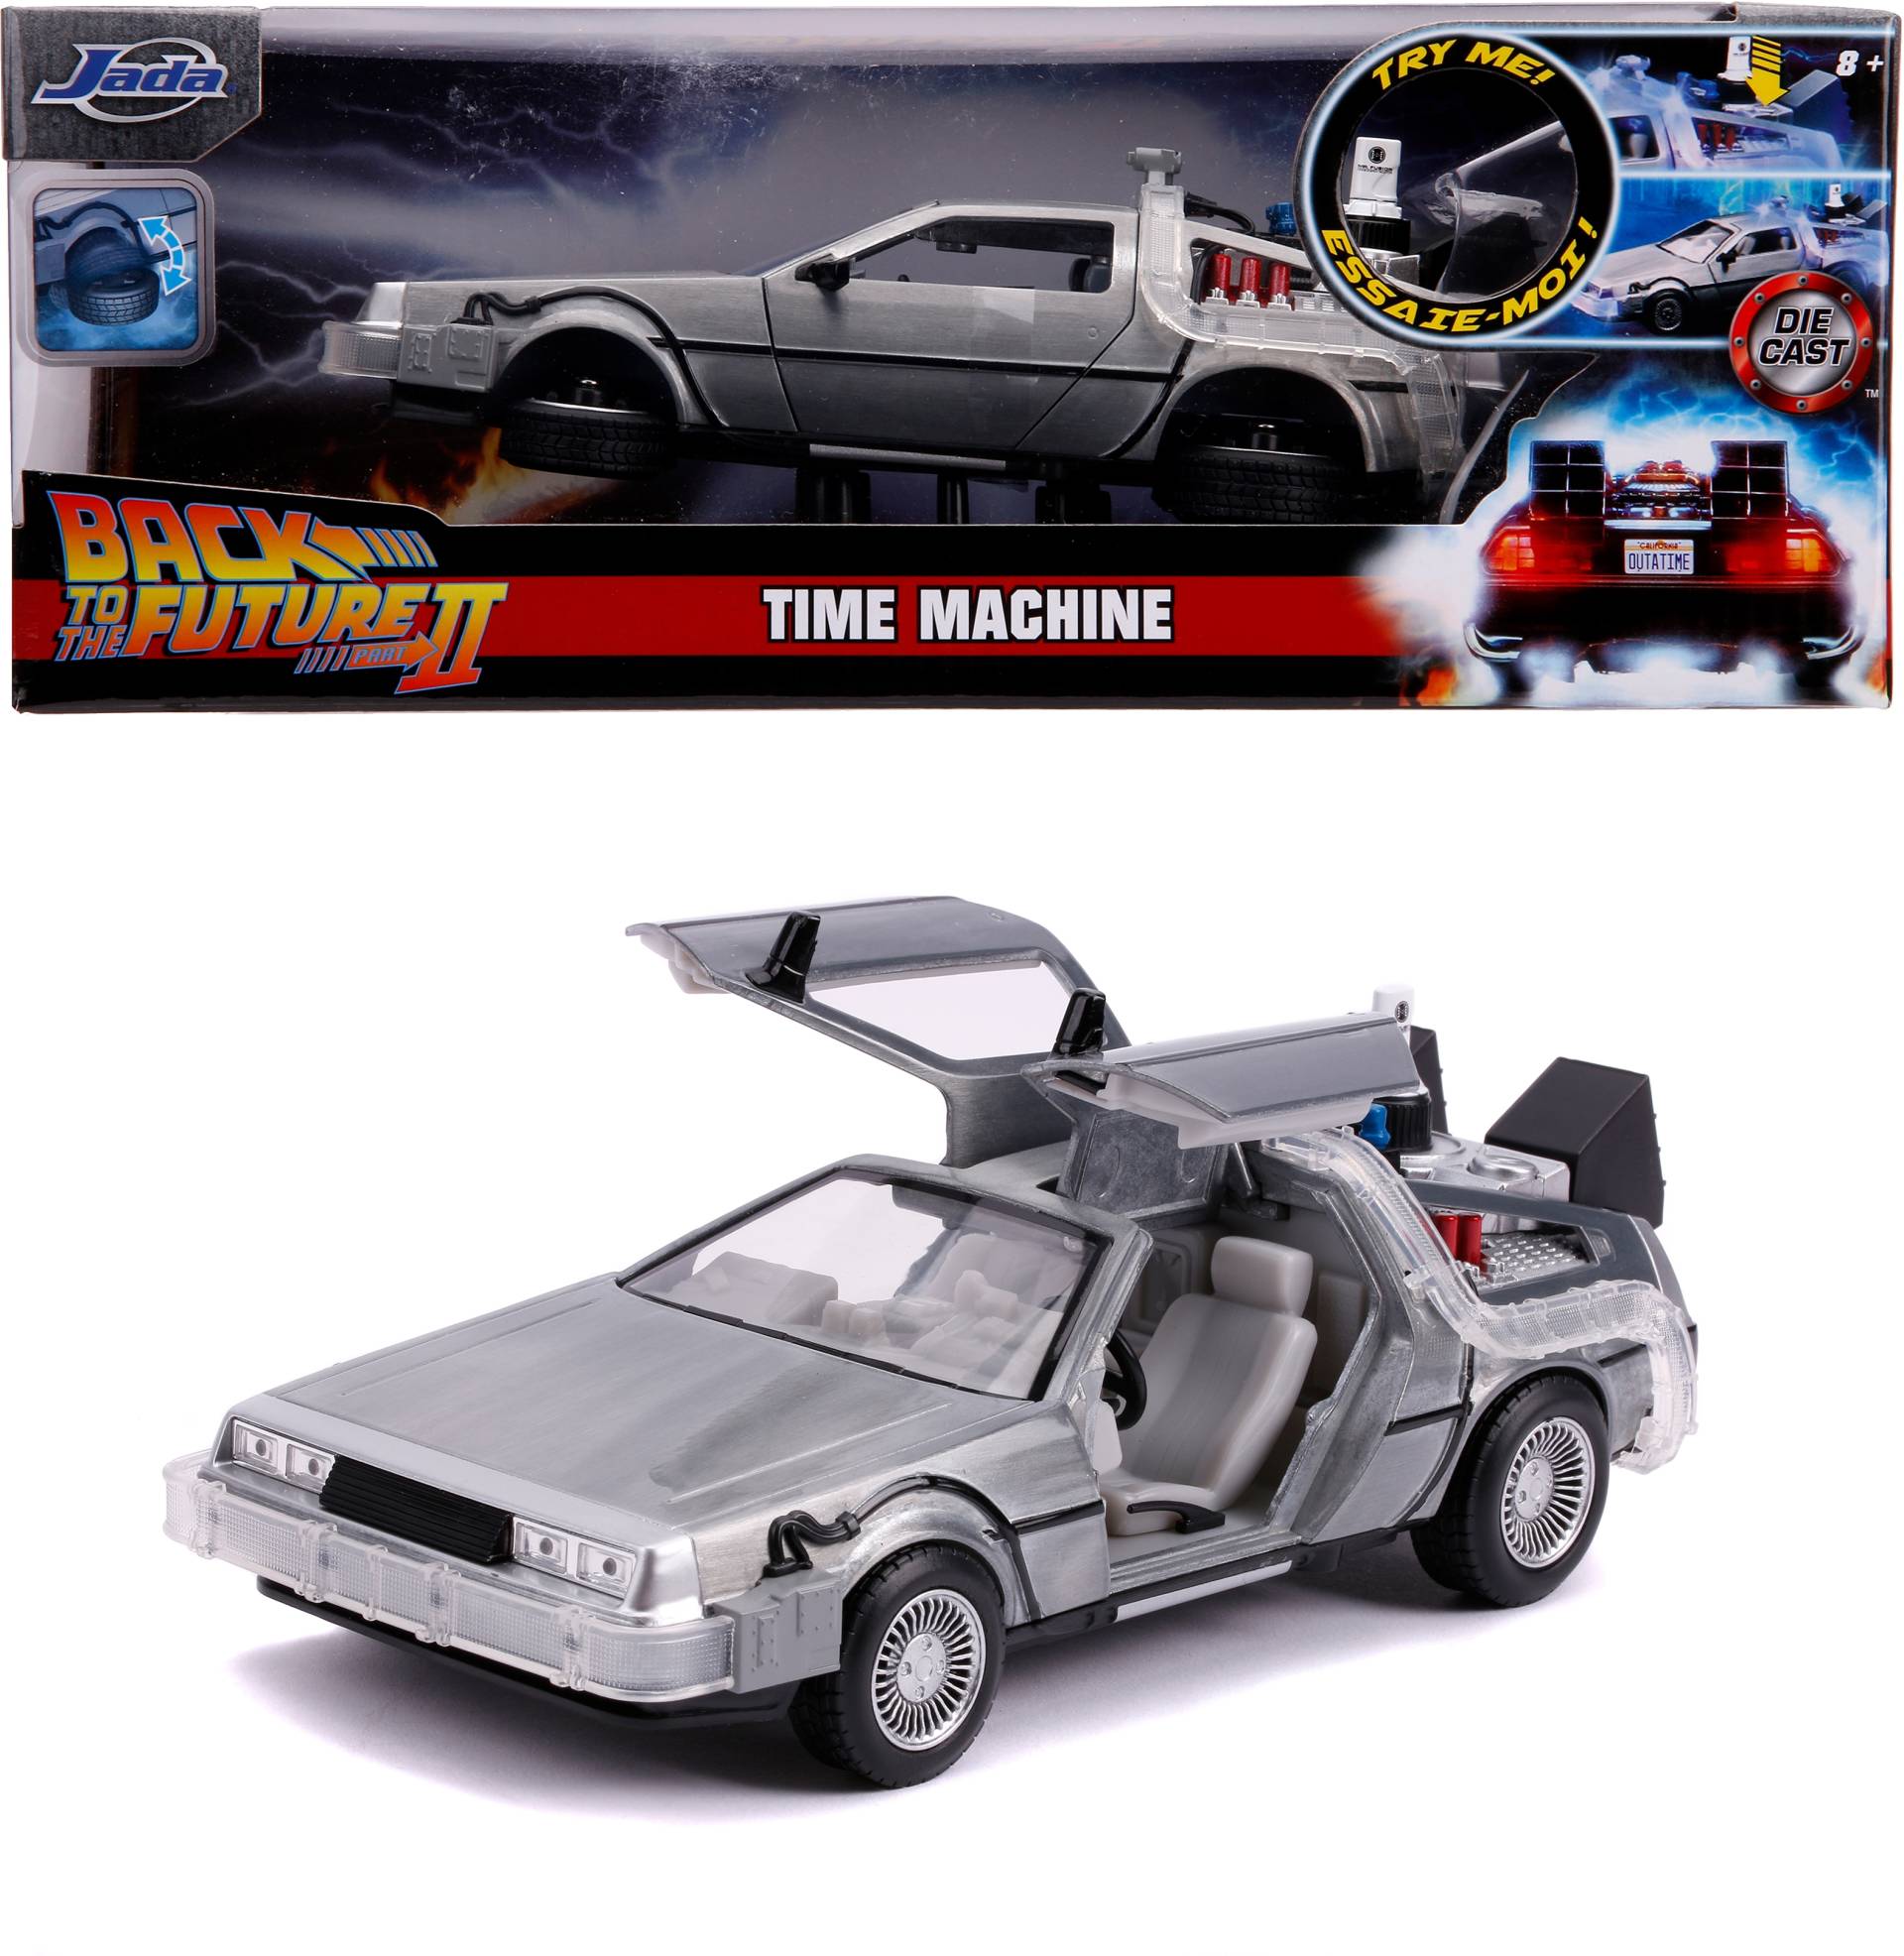 JADA Spielzeug-Auto »Time Machine, Back to the Future 2« von JADA